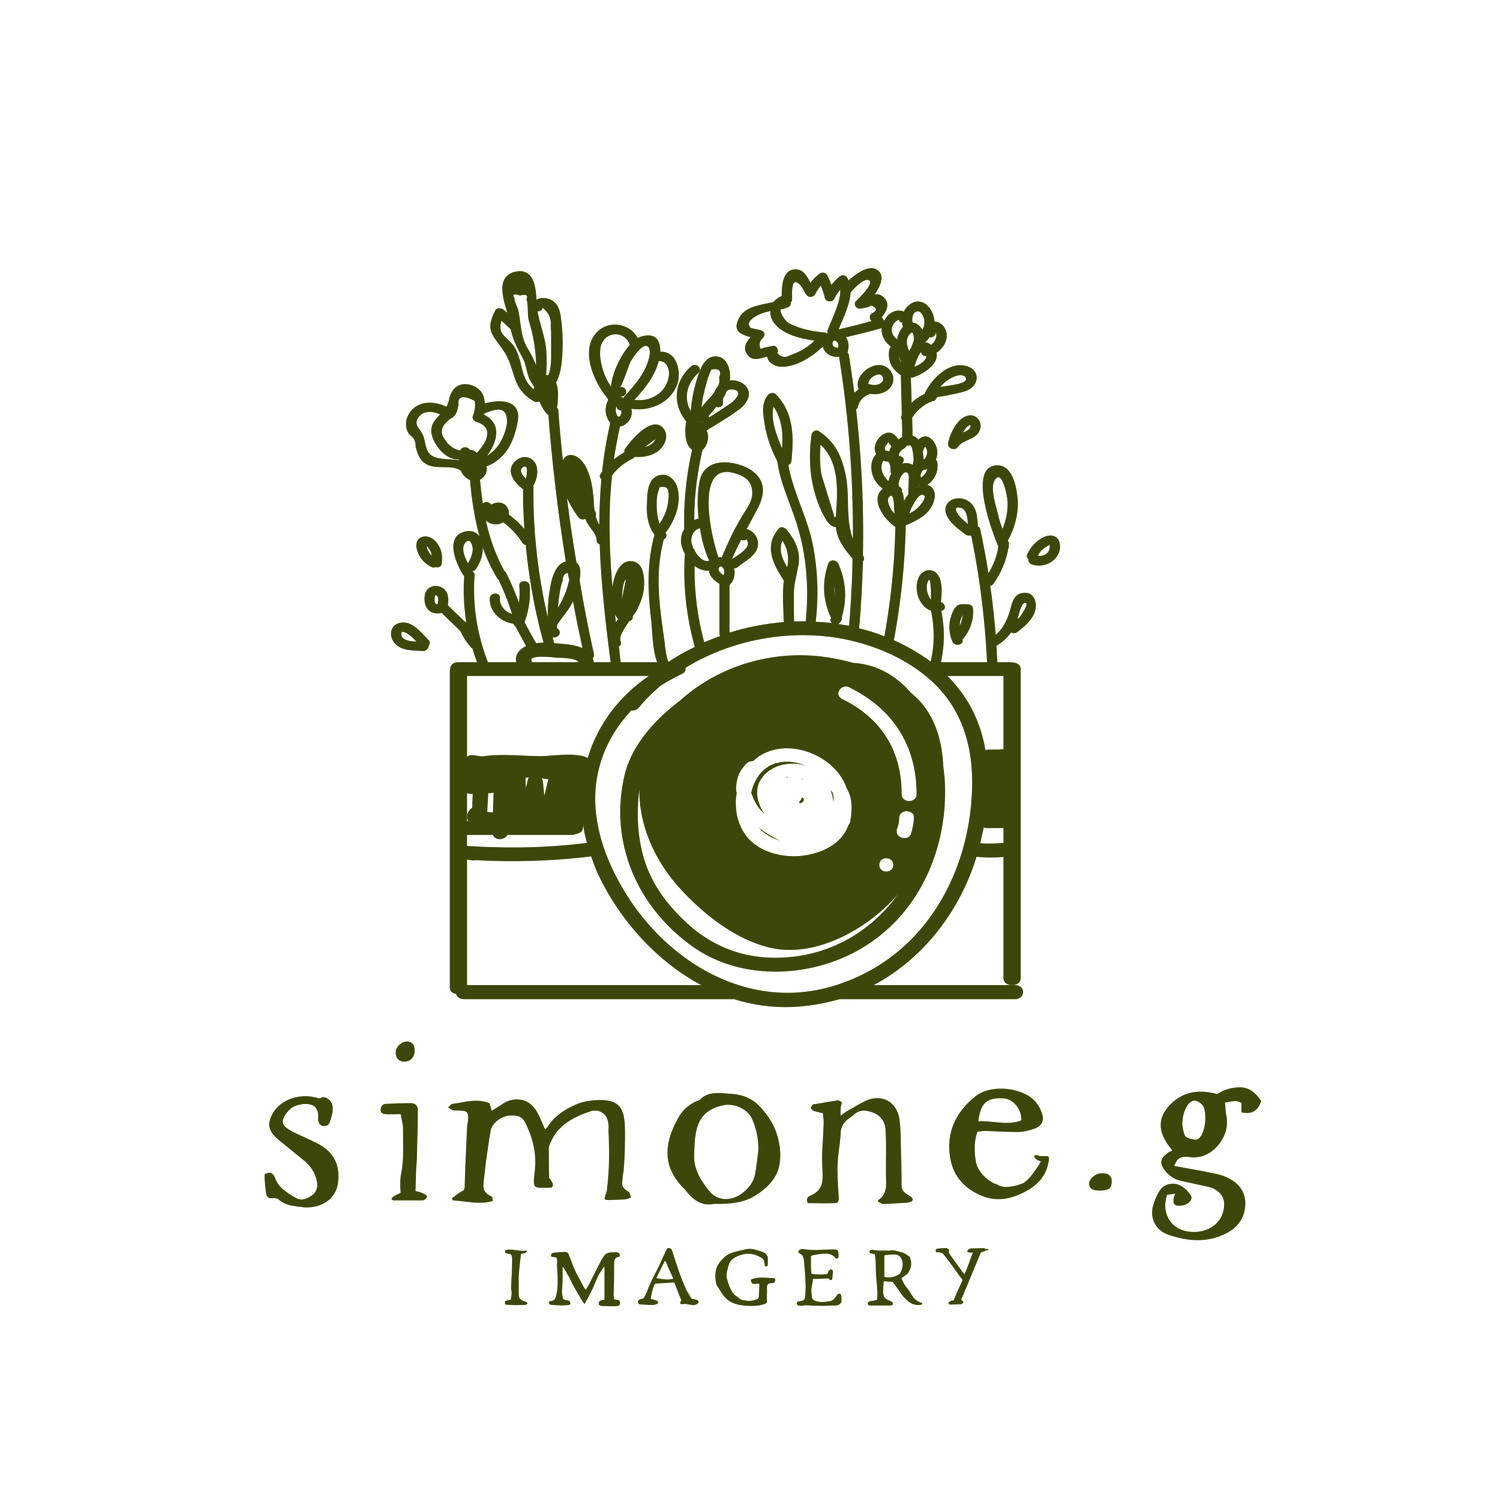 Simone G Imagery